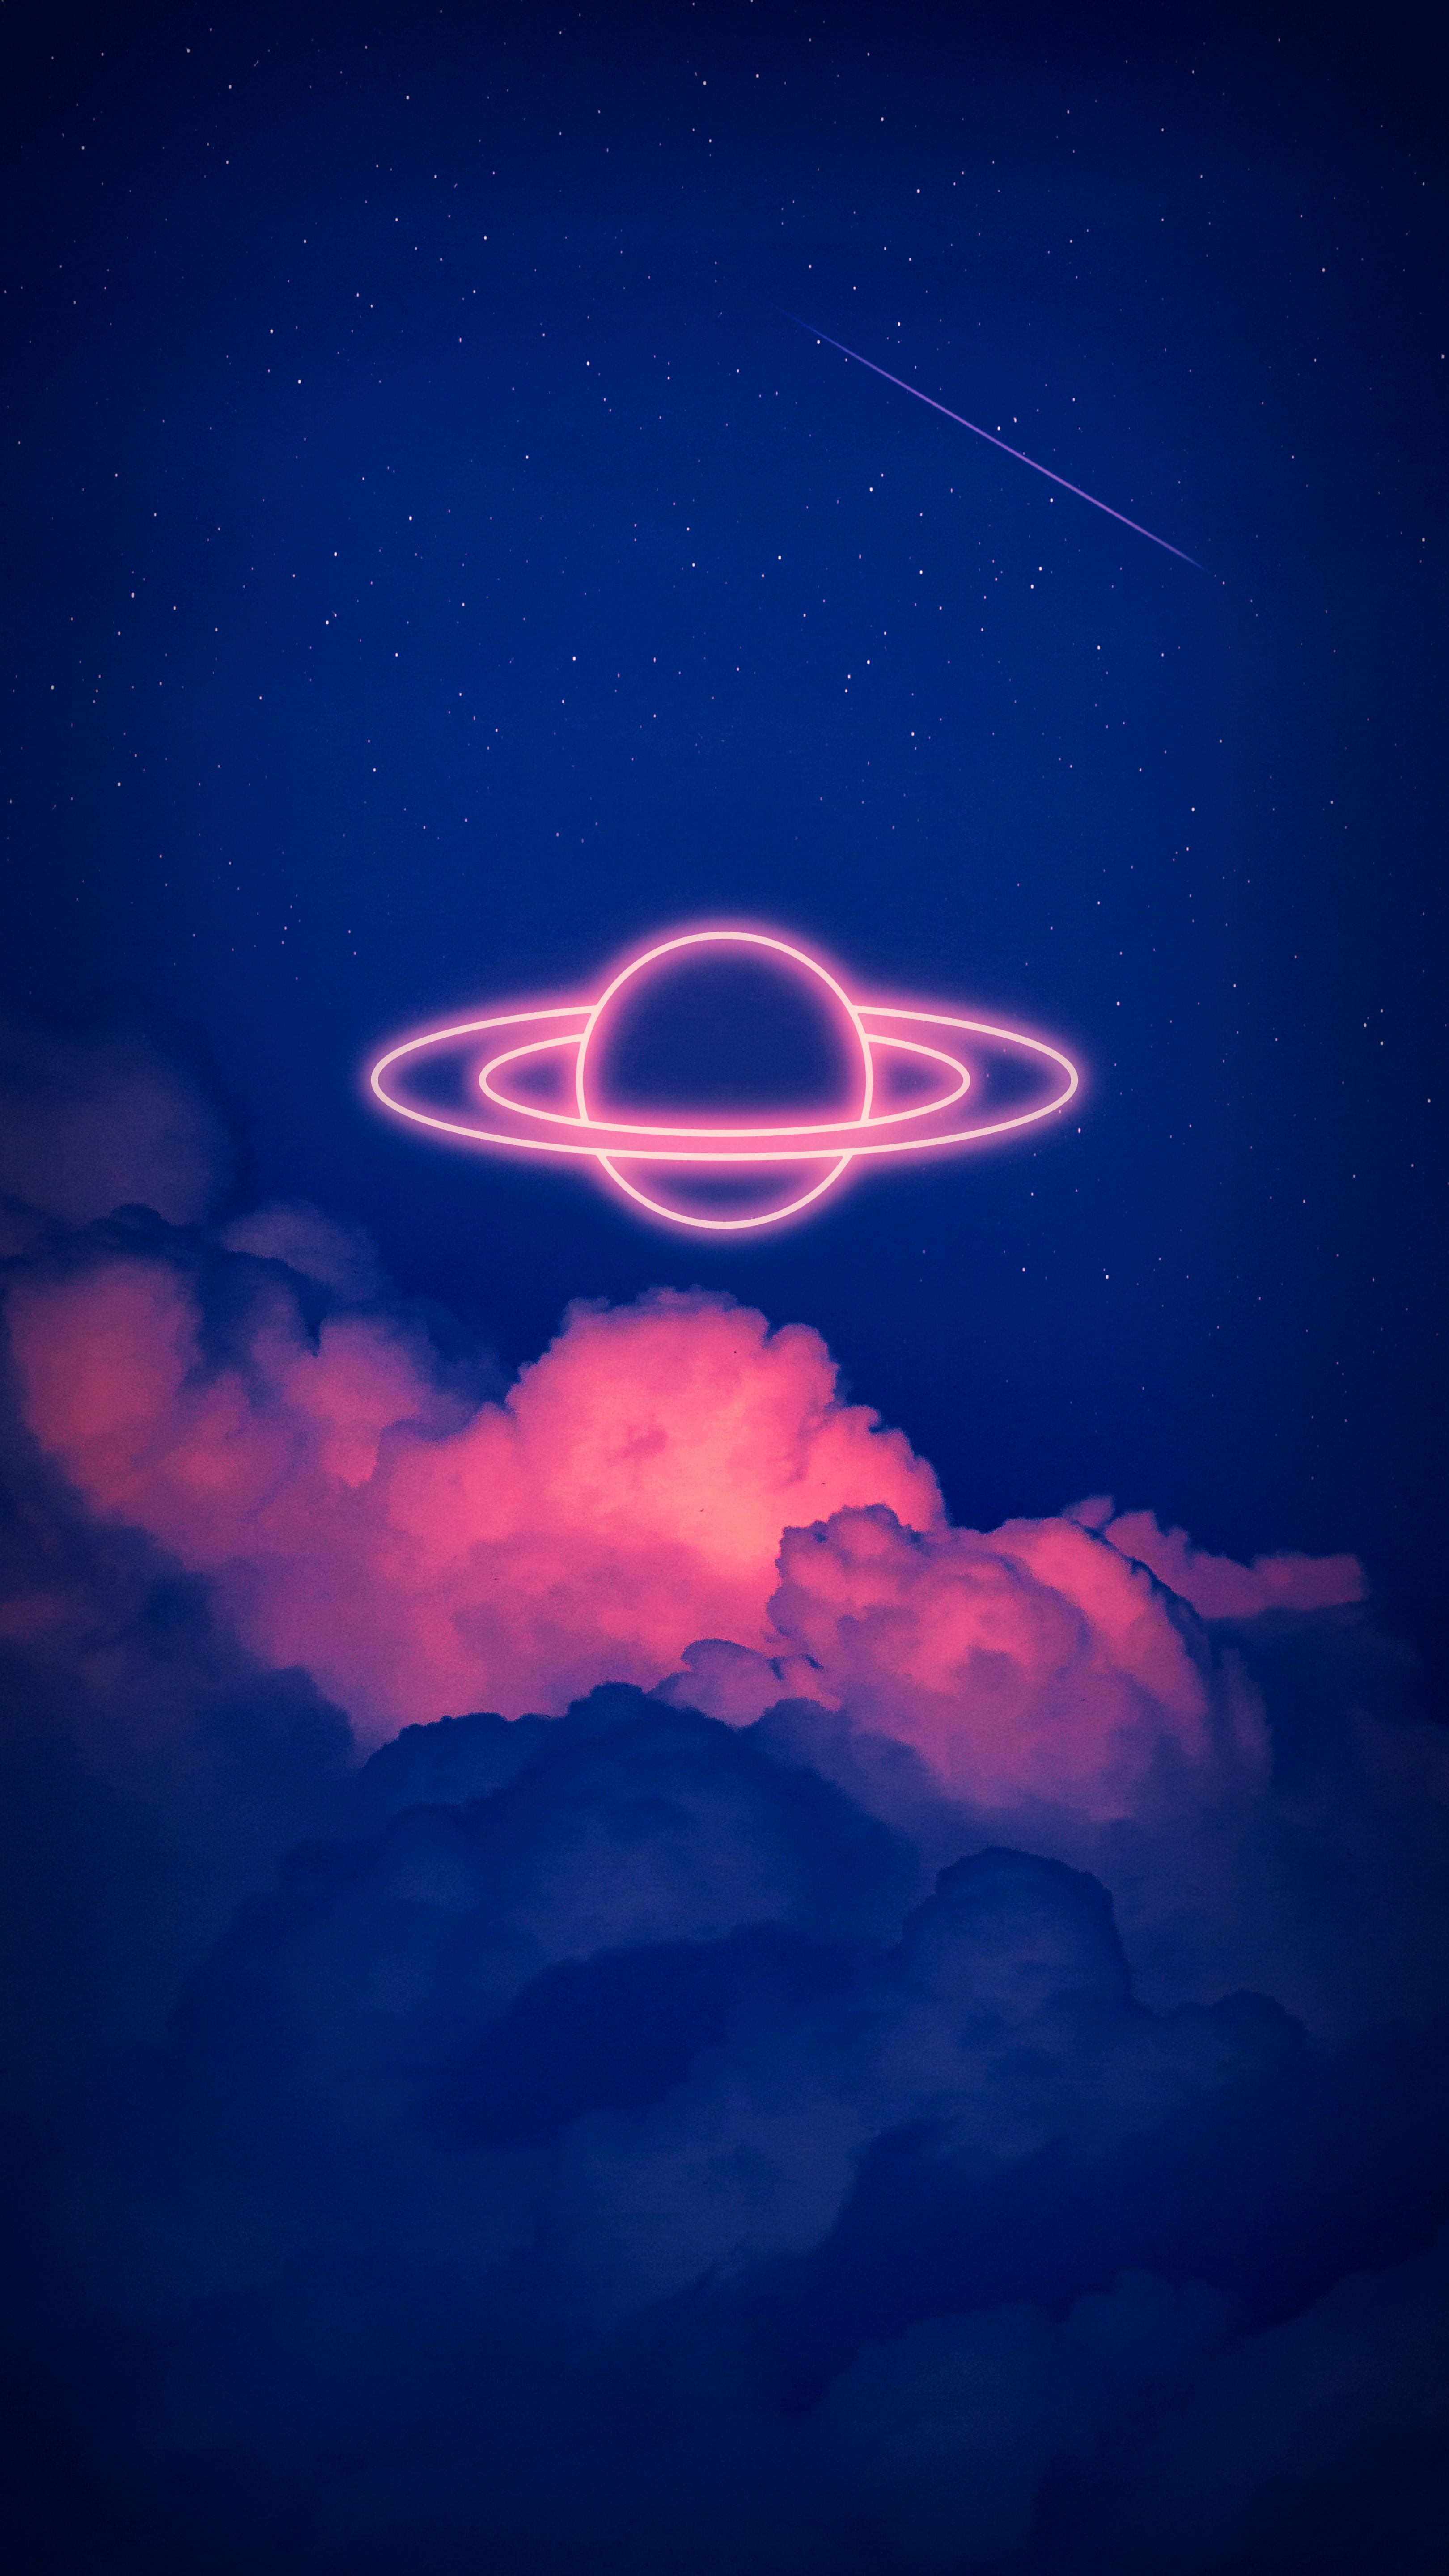 Neon Clouds Saturn. Galaxy wallpaper iphone, Neon wallpaper, Edgy wallpaper